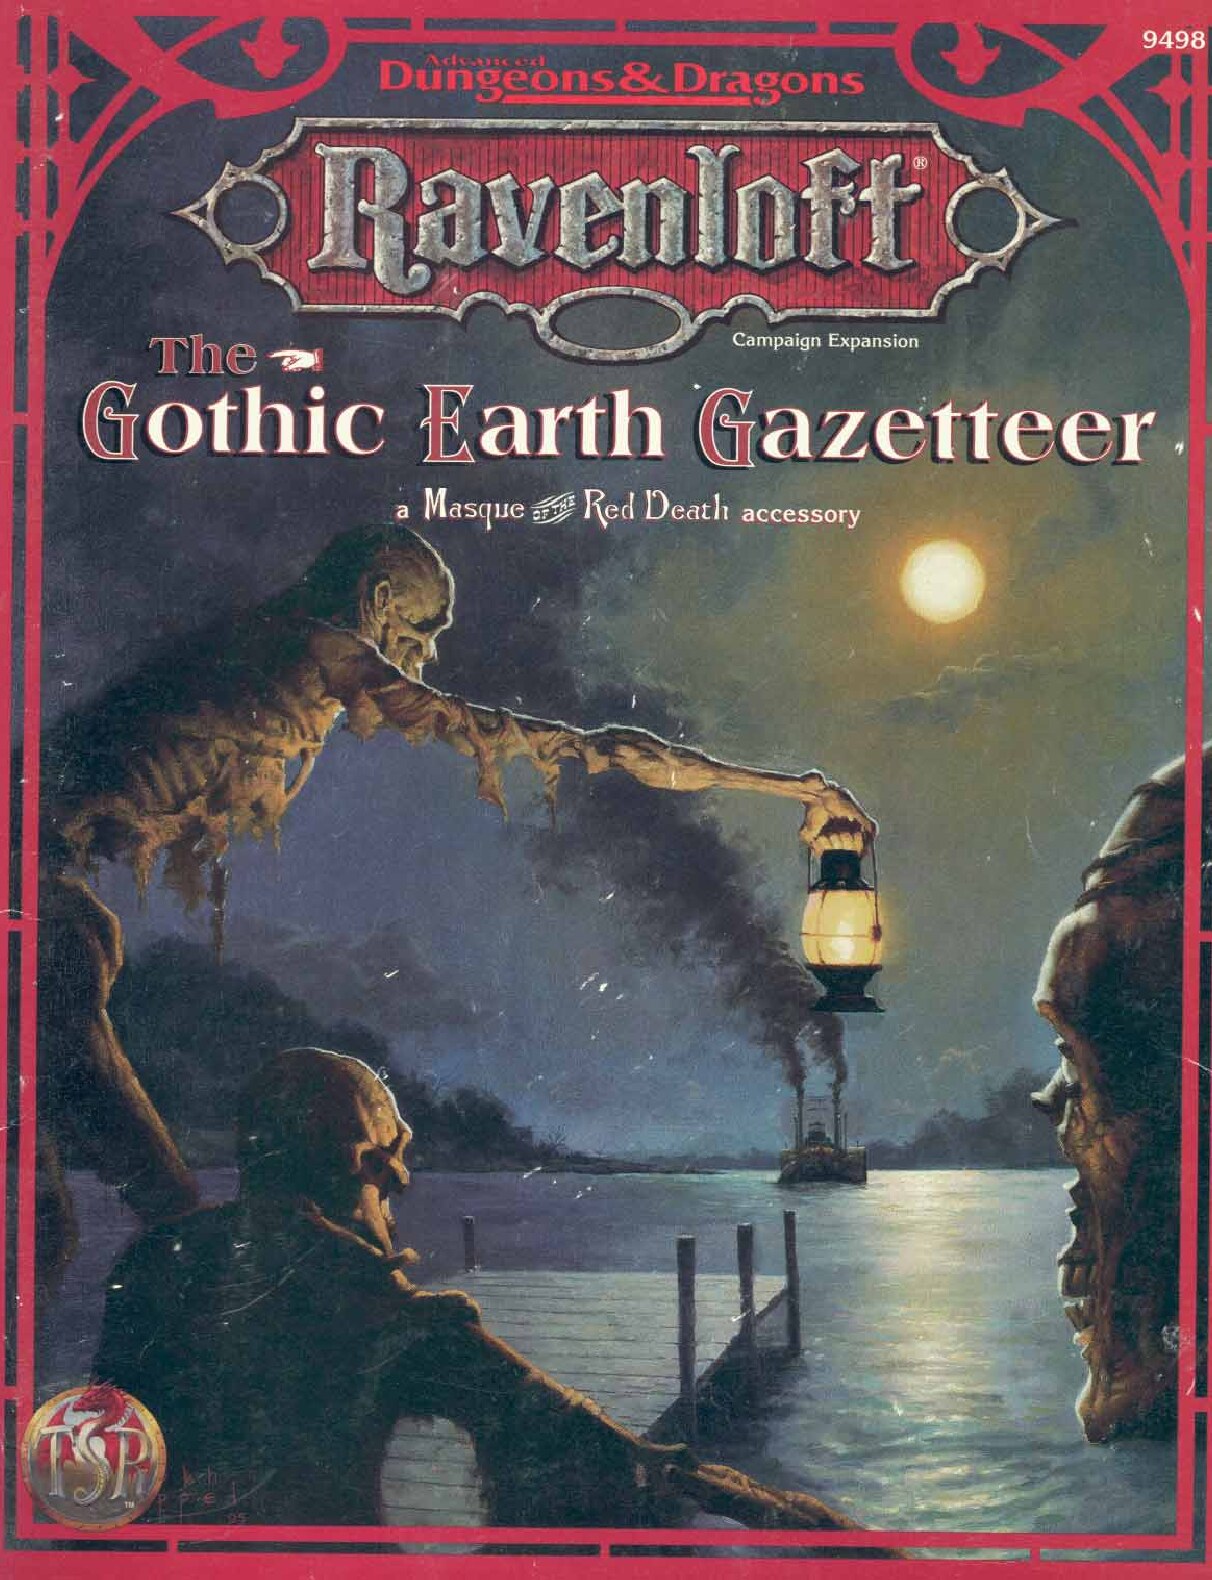 TSR 9498 The Gothic Earth Gazetter